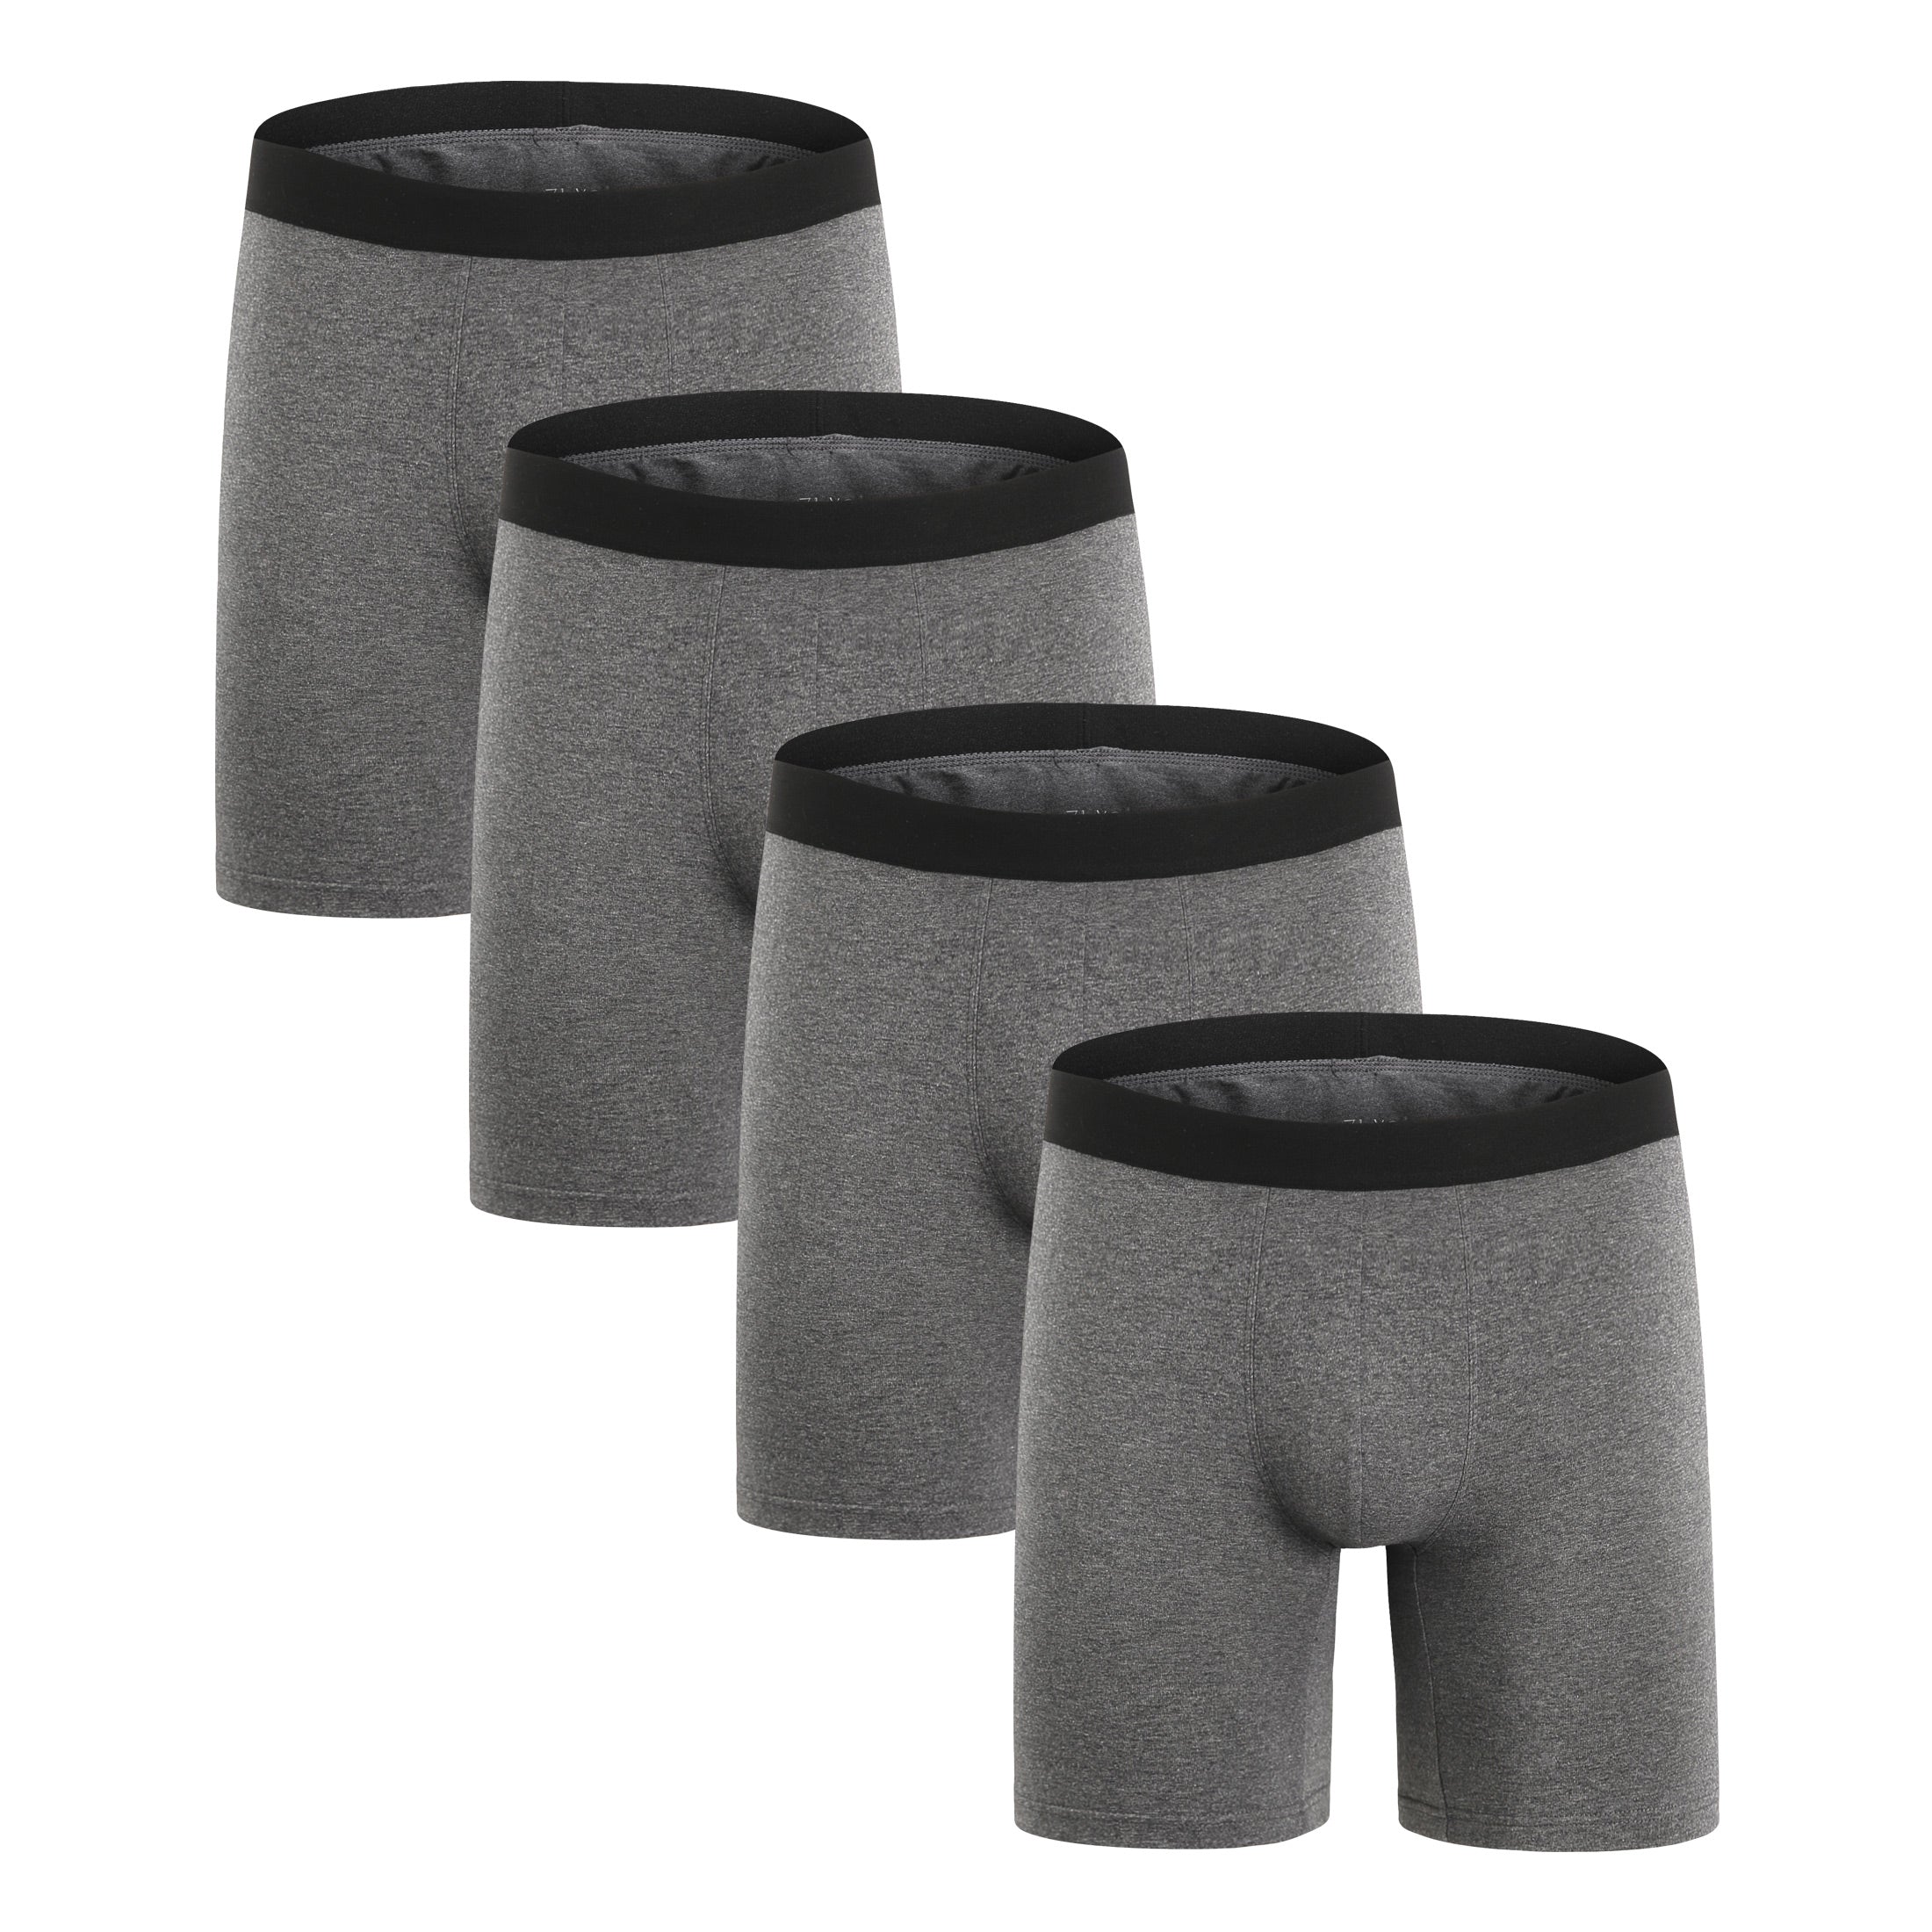 ZLYC Men's Long Leg Cotton Boxer Briefs Underwear, 3/4 Pack